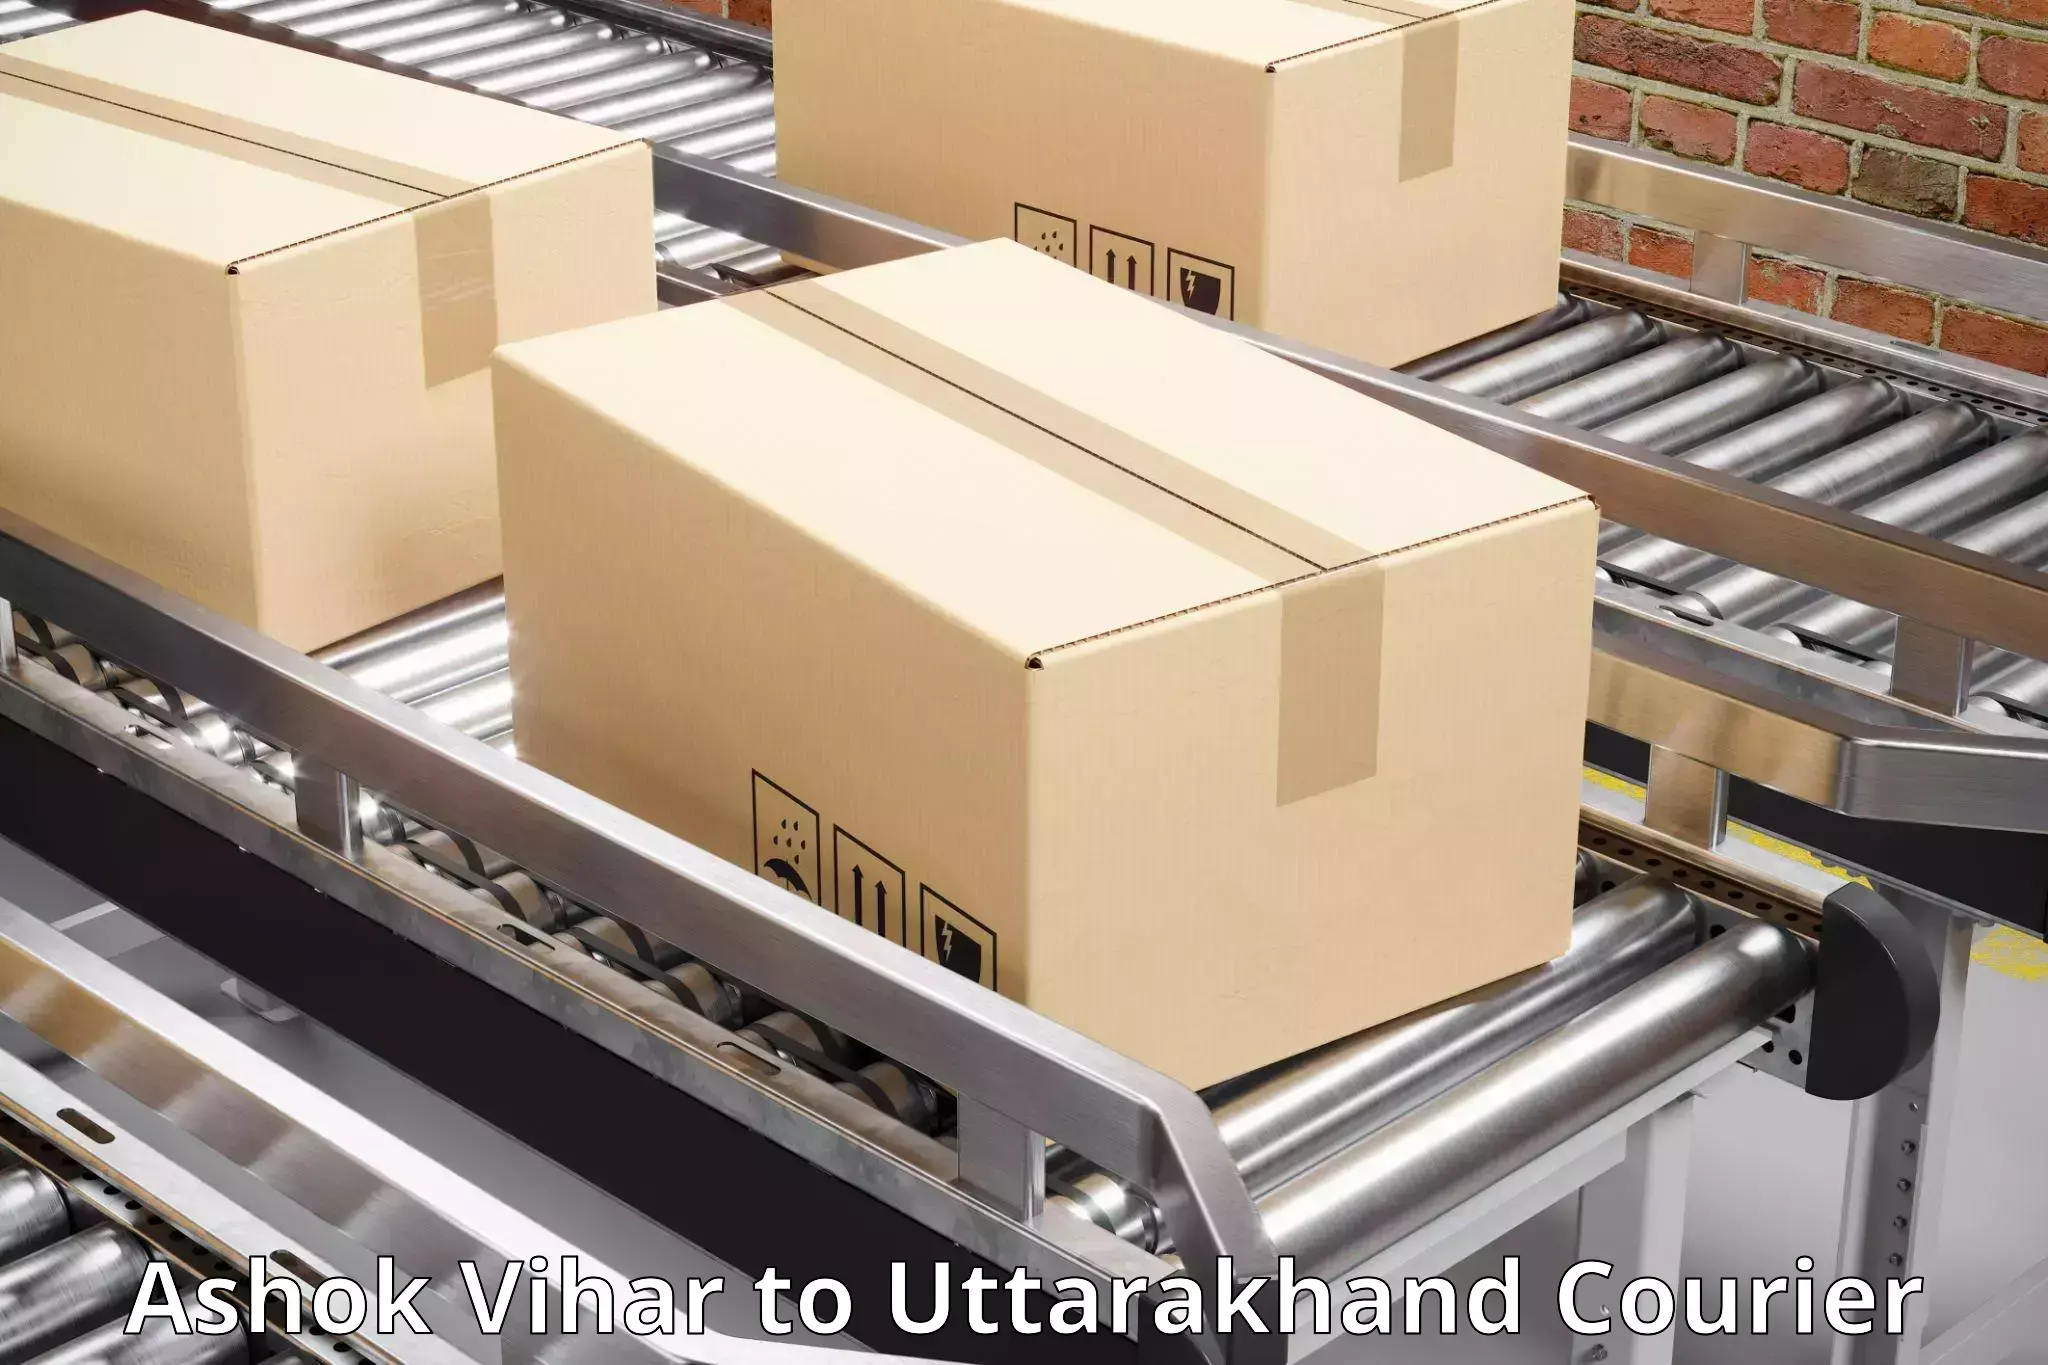 International parcel service Ashok Vihar to Almora